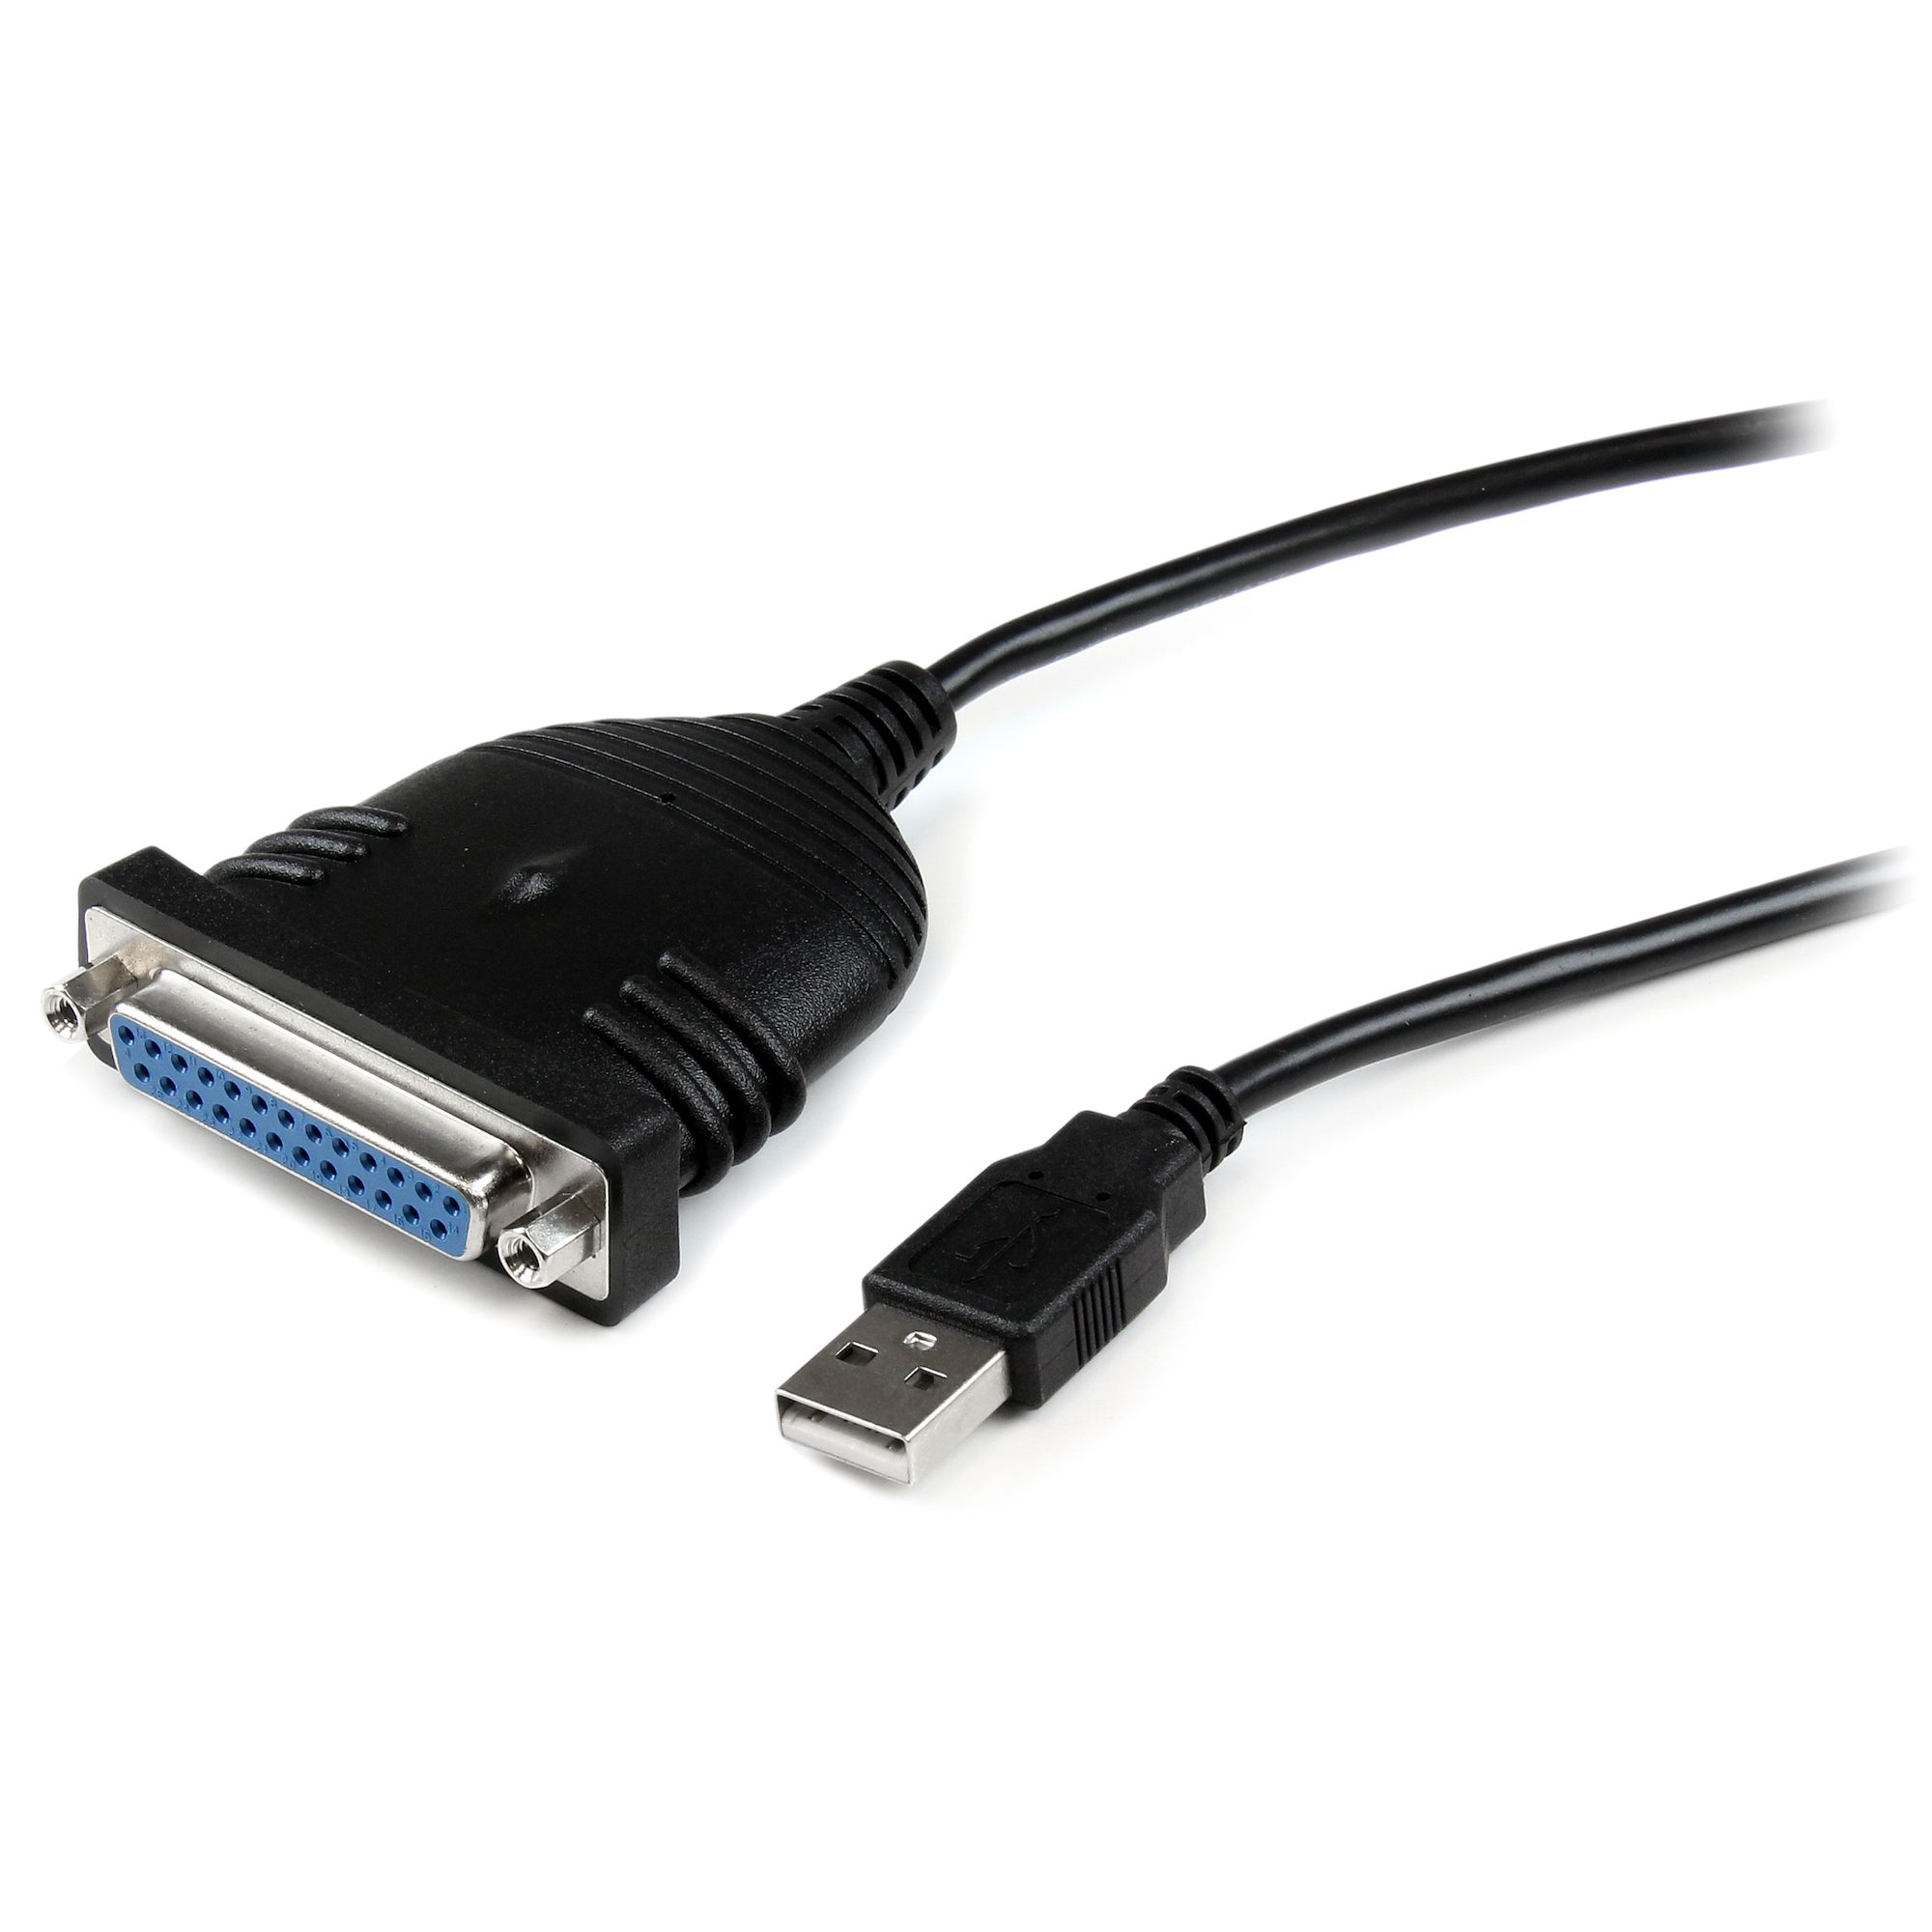 【ICUSB1284D25】6 FT USB TO DB25 PARALLEL PRINTE